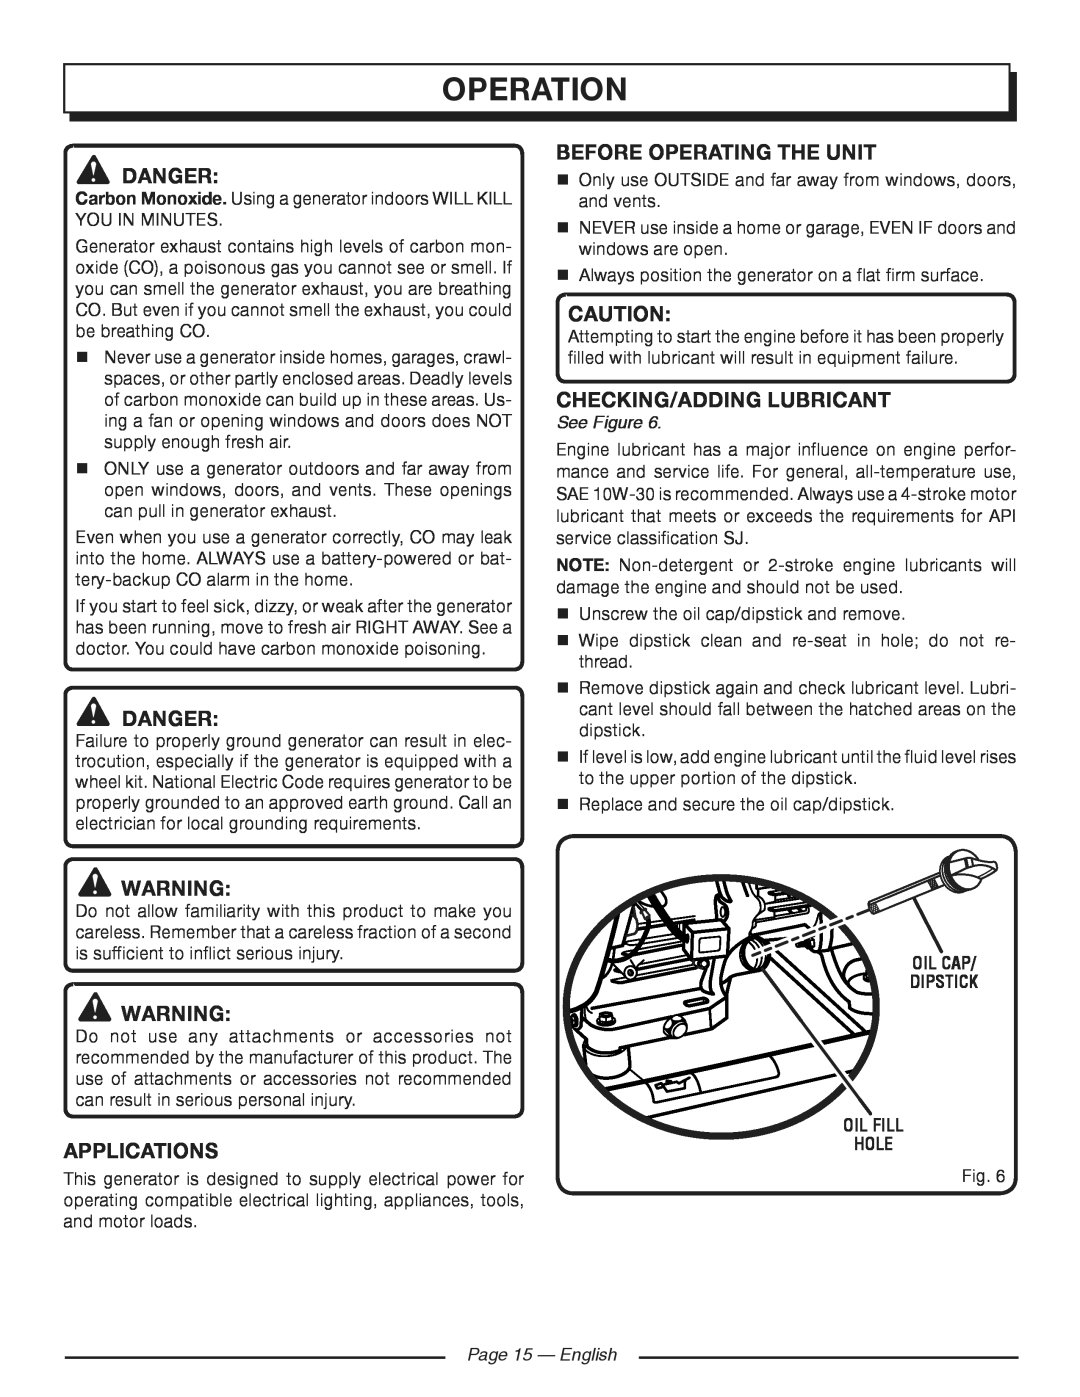 Homelite HG5700 manuel dutilisation operation, See Figure, oil cap/ dipstick oil fill hole, Page 15 - English 